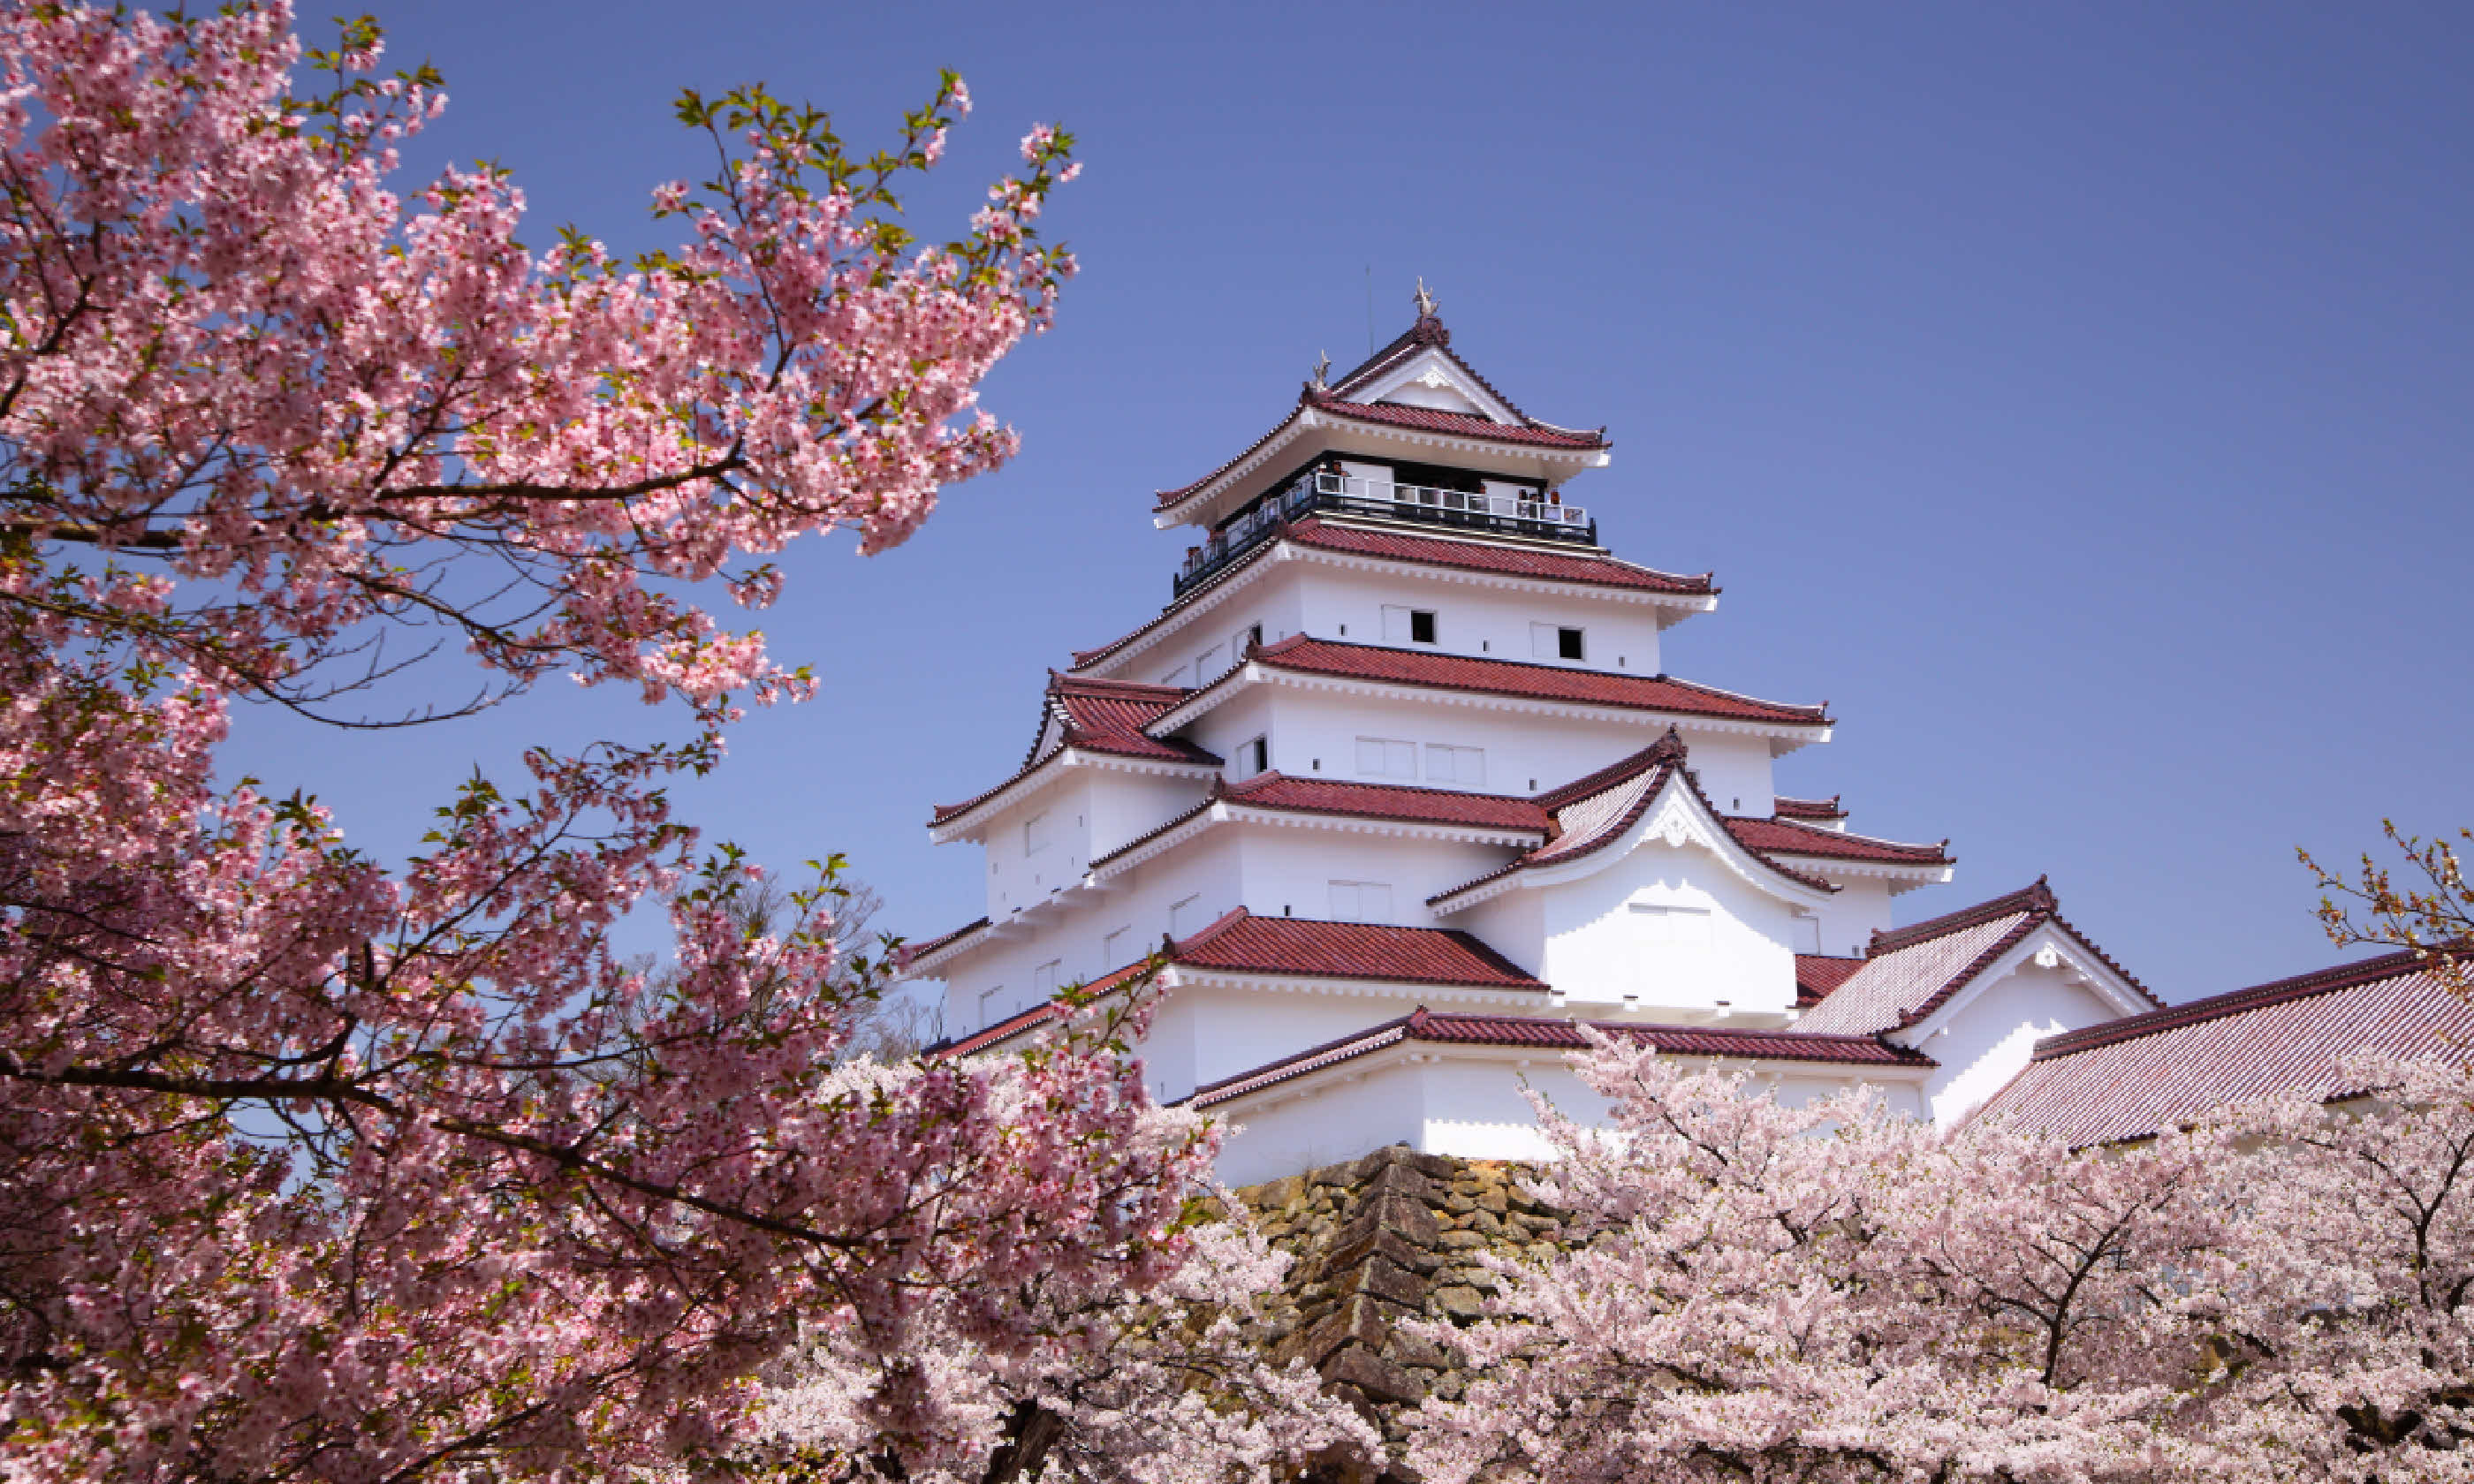 Cherry blossom in Fukushima, Japan (Shutterstock)